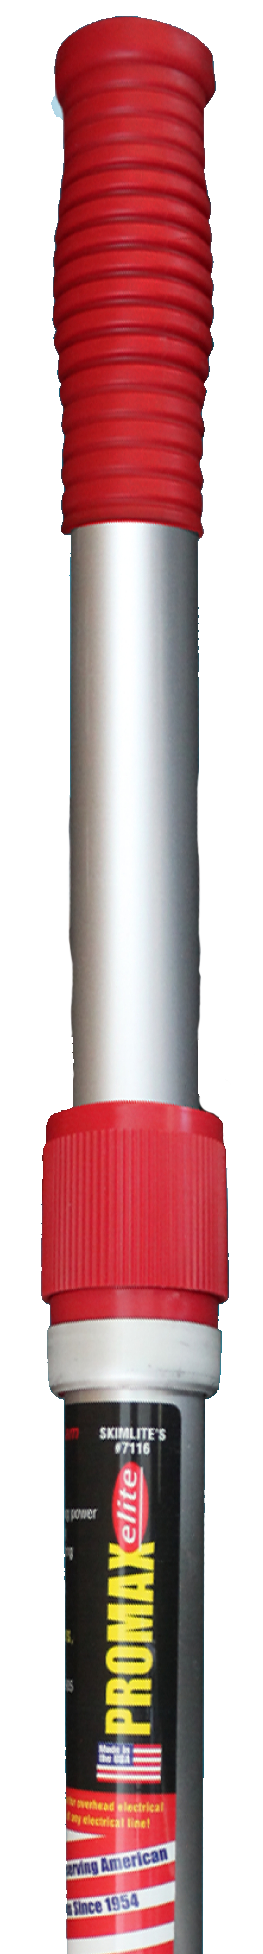 Skimlite 6-12 Ft. ProMax Heavy Duty Telescopic Pole with External Lock - 7012E